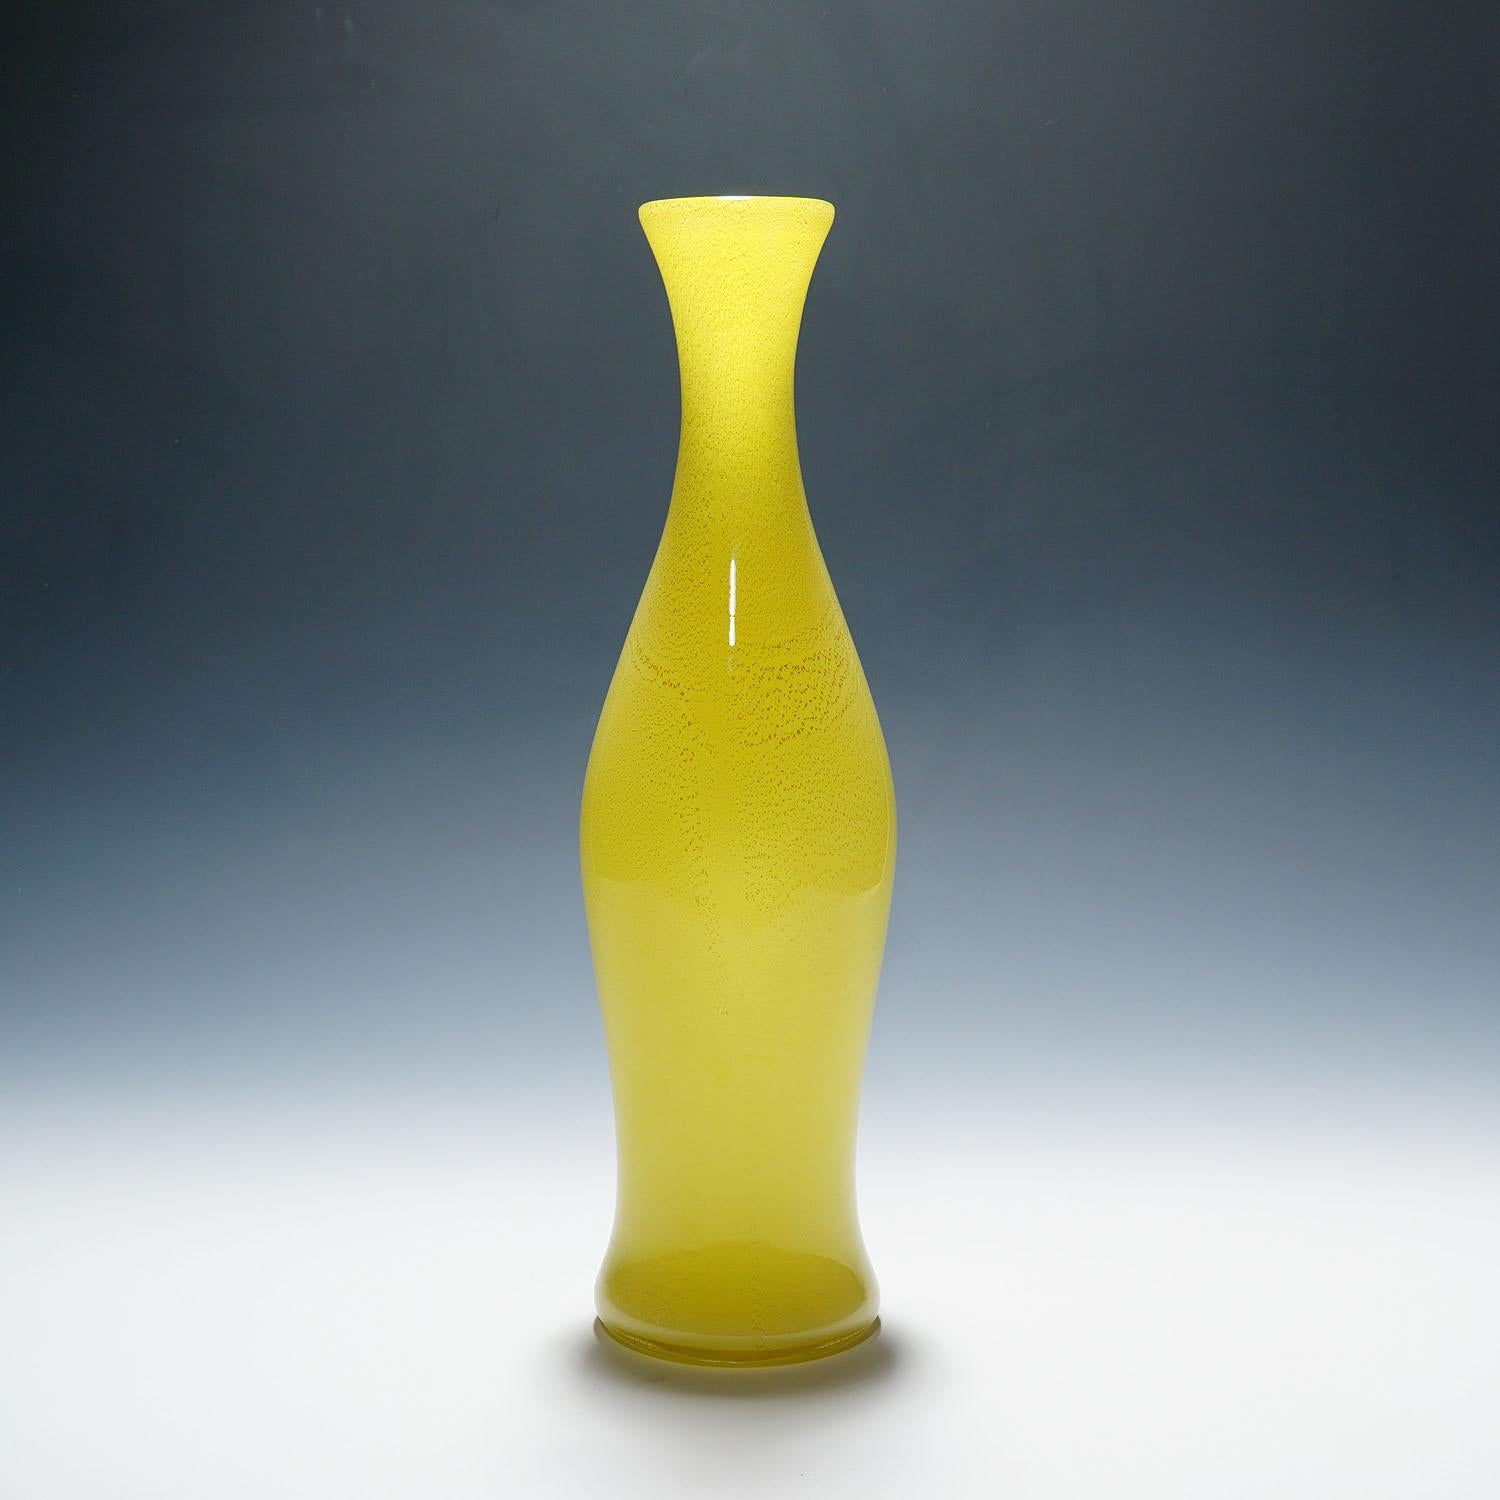 Grand vase en verre Soffiato de Galliano Ferro, Murano, vers 1950

Un grand vase en verre d'art fabriqué par Galliano Ferro et très probablement conçu par Giorigio Ferro ou Vinicio Vianello vers 1950. Verre fin en plusieurs couches de verre jaune,